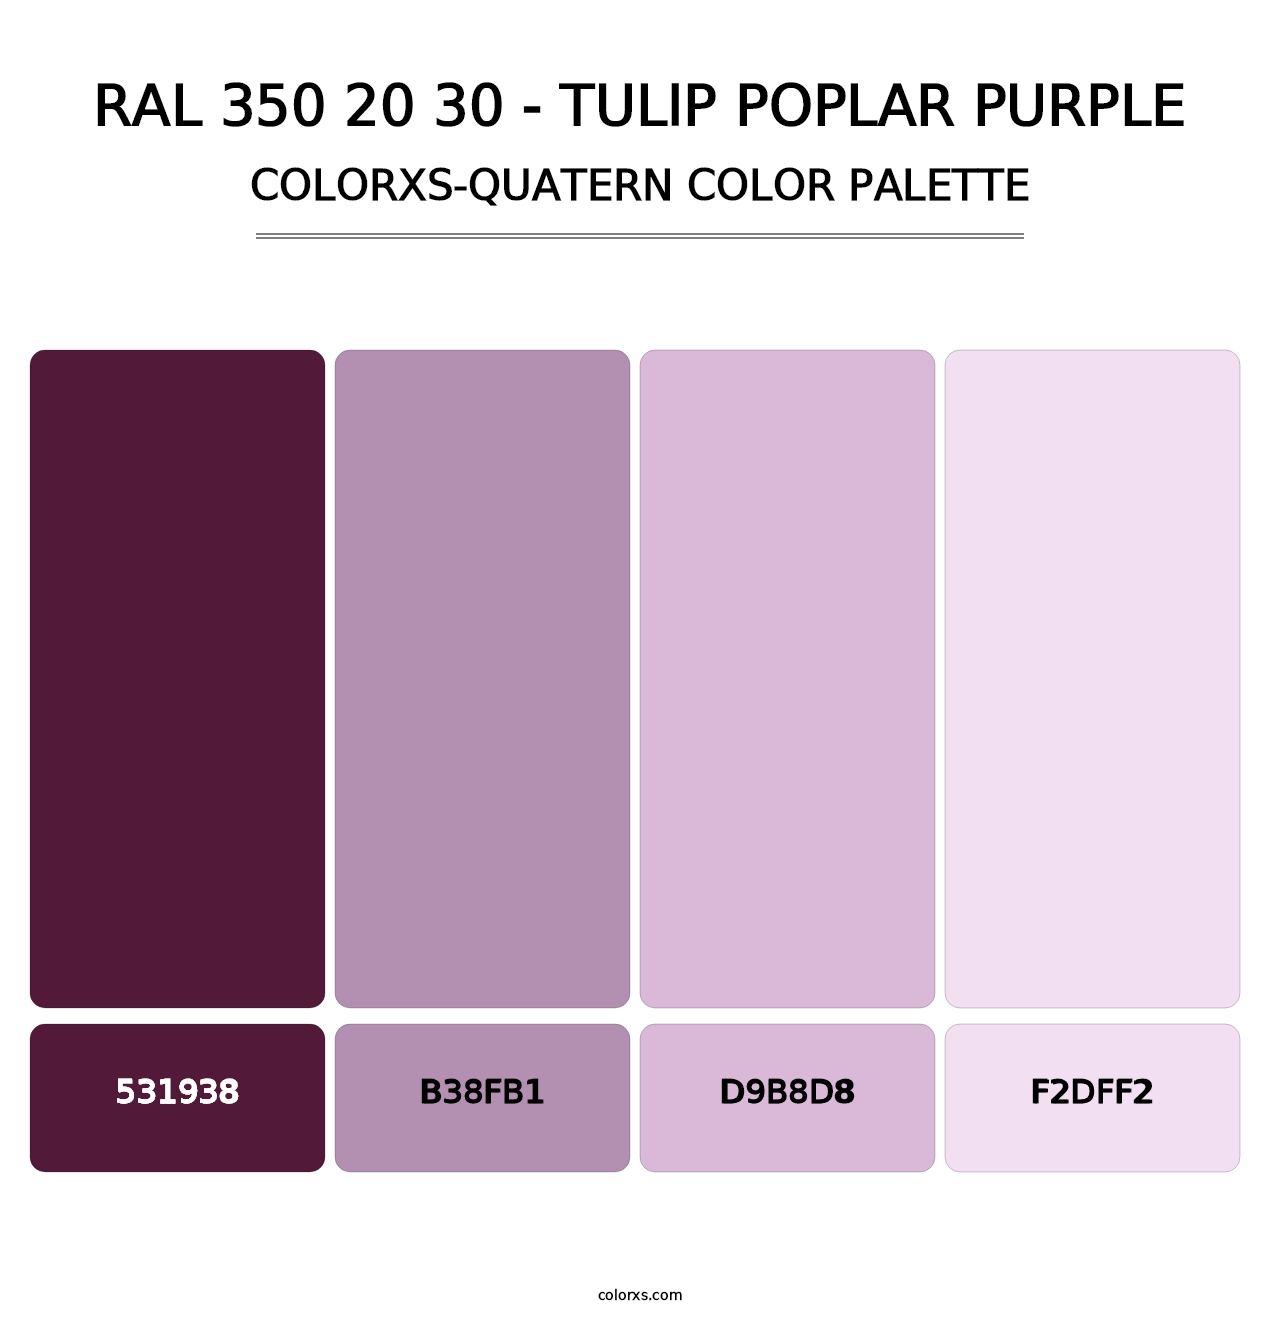 RAL 350 20 30 - Tulip Poplar Purple - Colorxs Quatern Palette